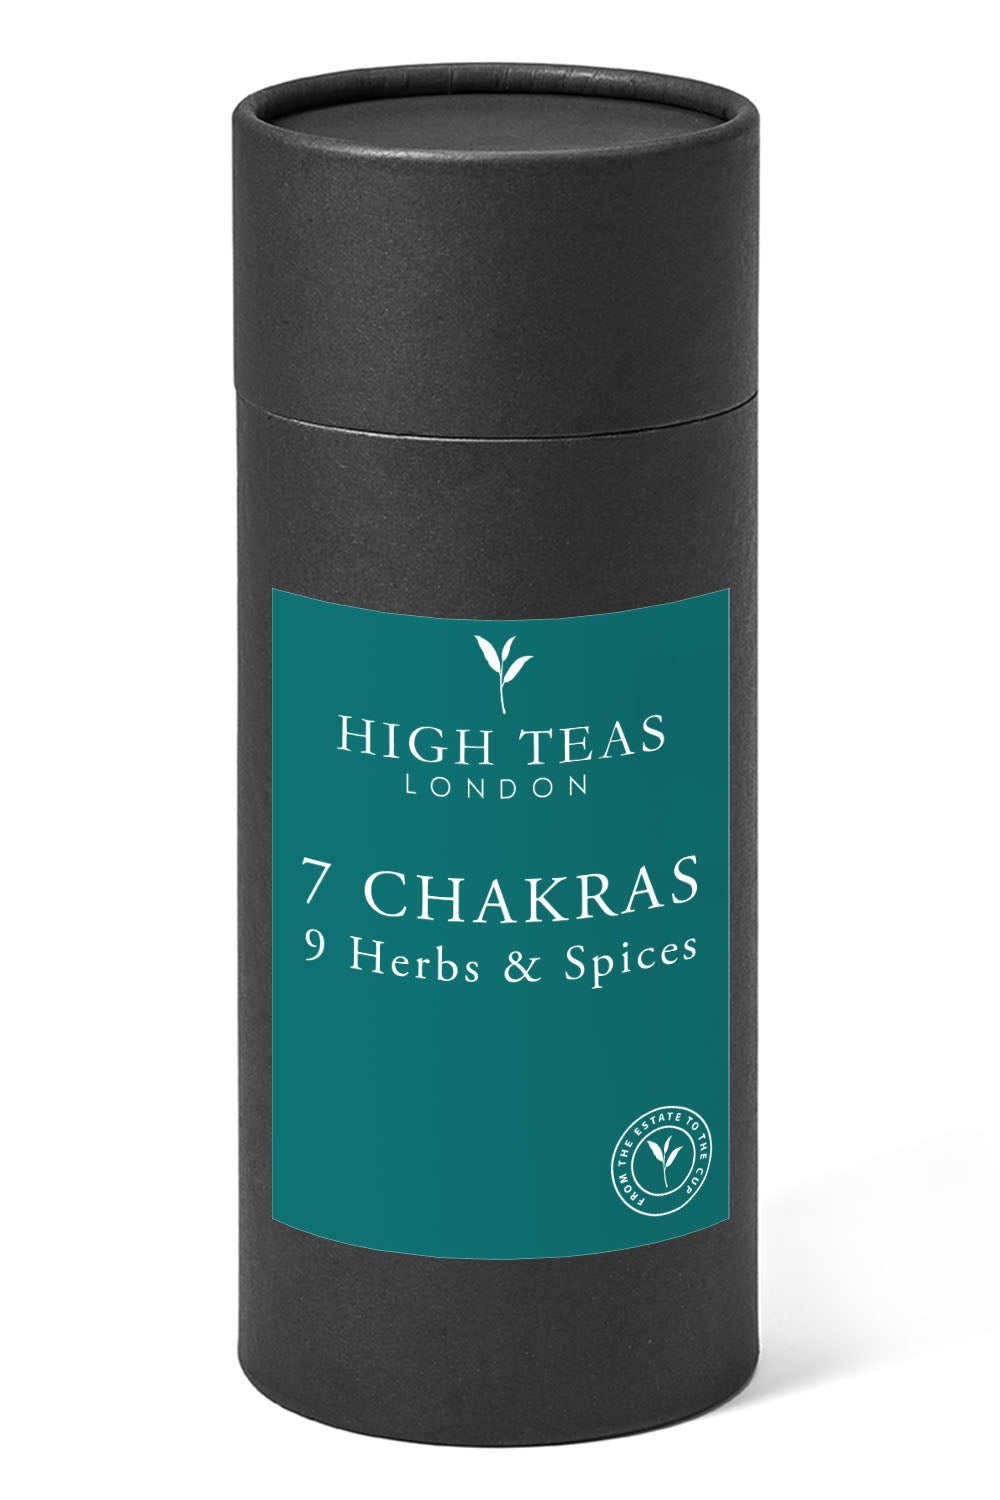 7 Chakras-150g gift-Loose Leaf Tea-High Teas